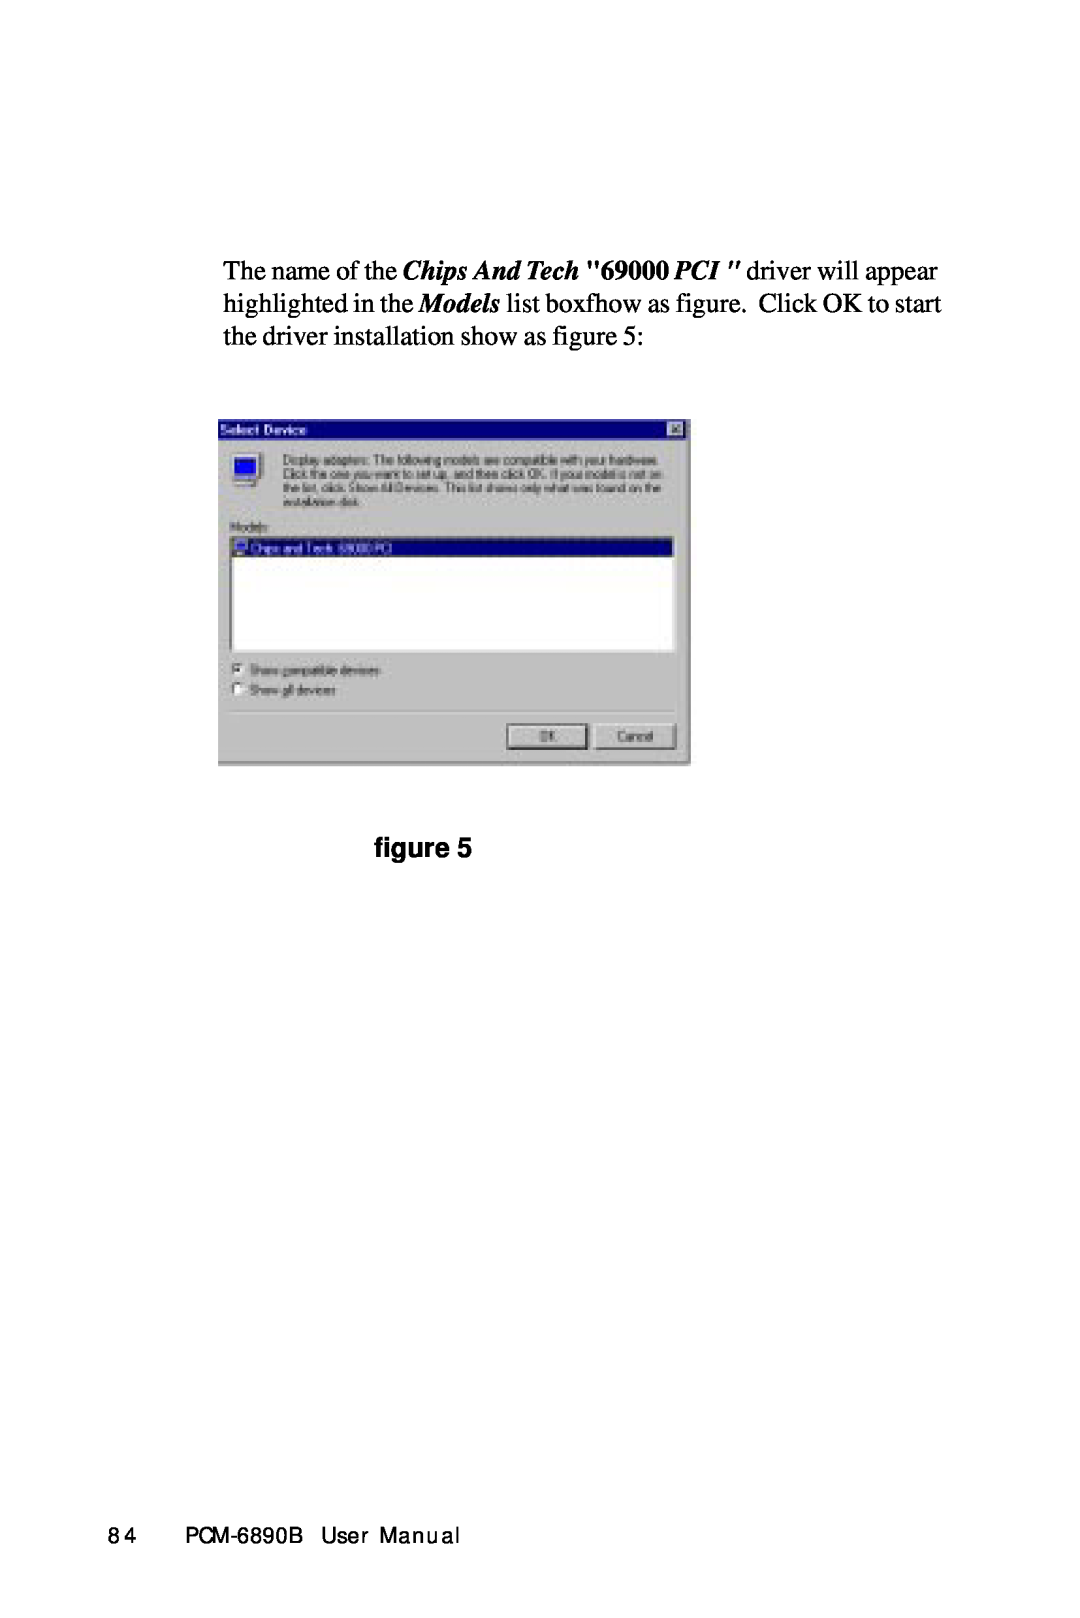 IBM All-in-One FC/Socket 370 Celeron manual PCM-6890B User Manual 